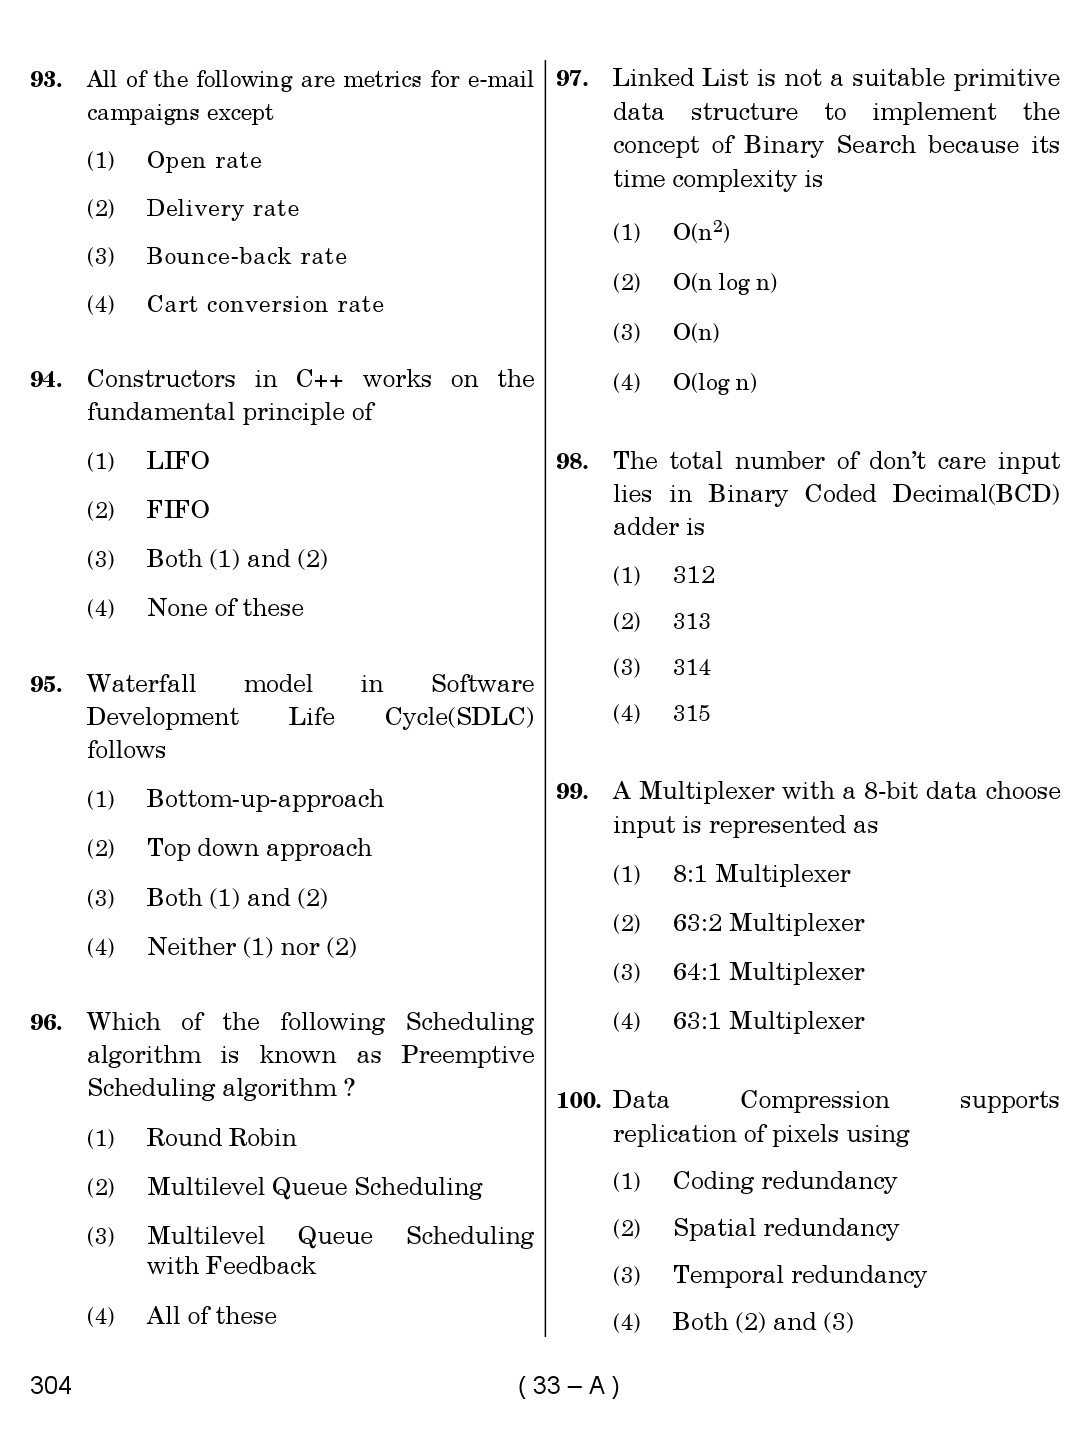 Karnataka PSC Computer Science Teachers Exam Sample Question Paper 2018 33